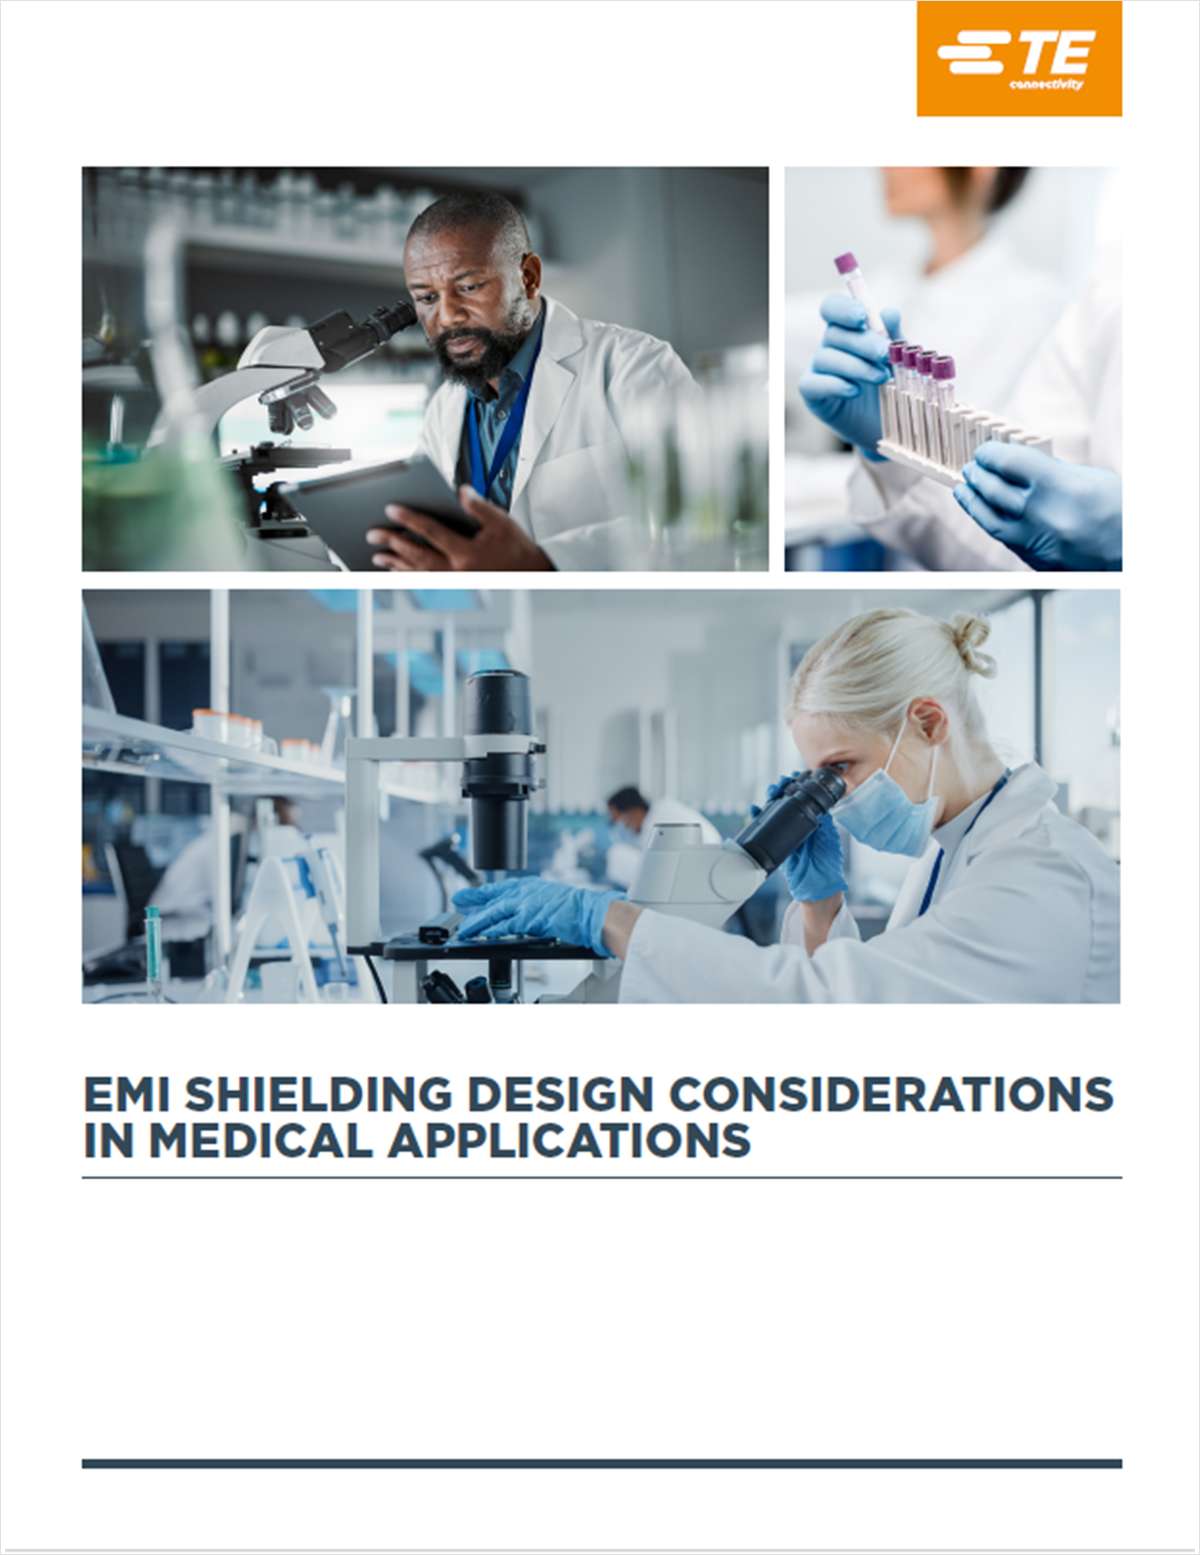 EMI Design Considerations for Medical Applications